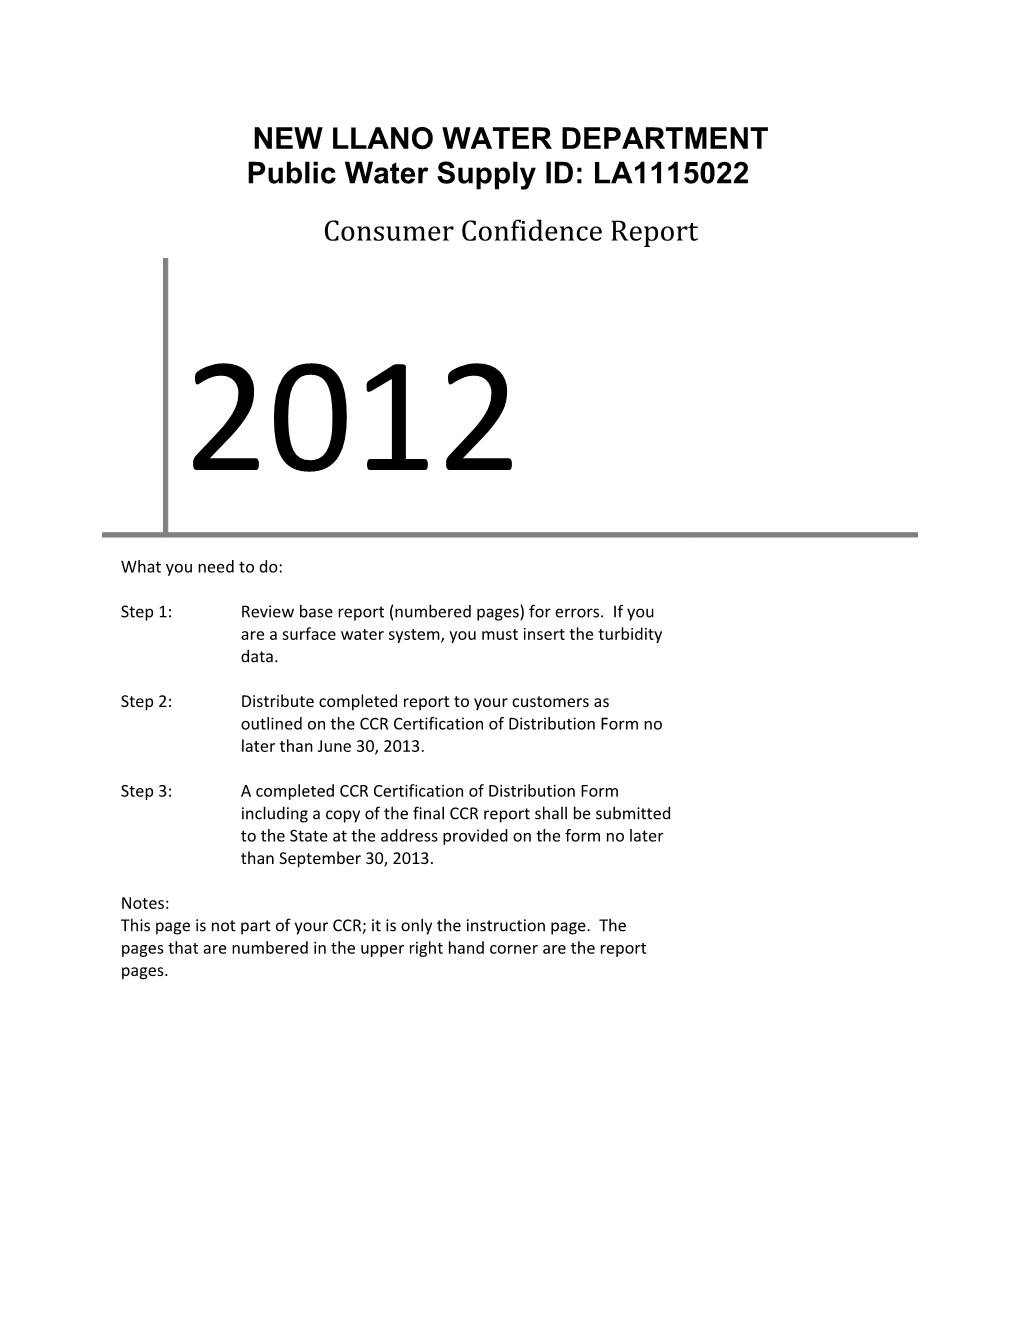 New Llano Water Department